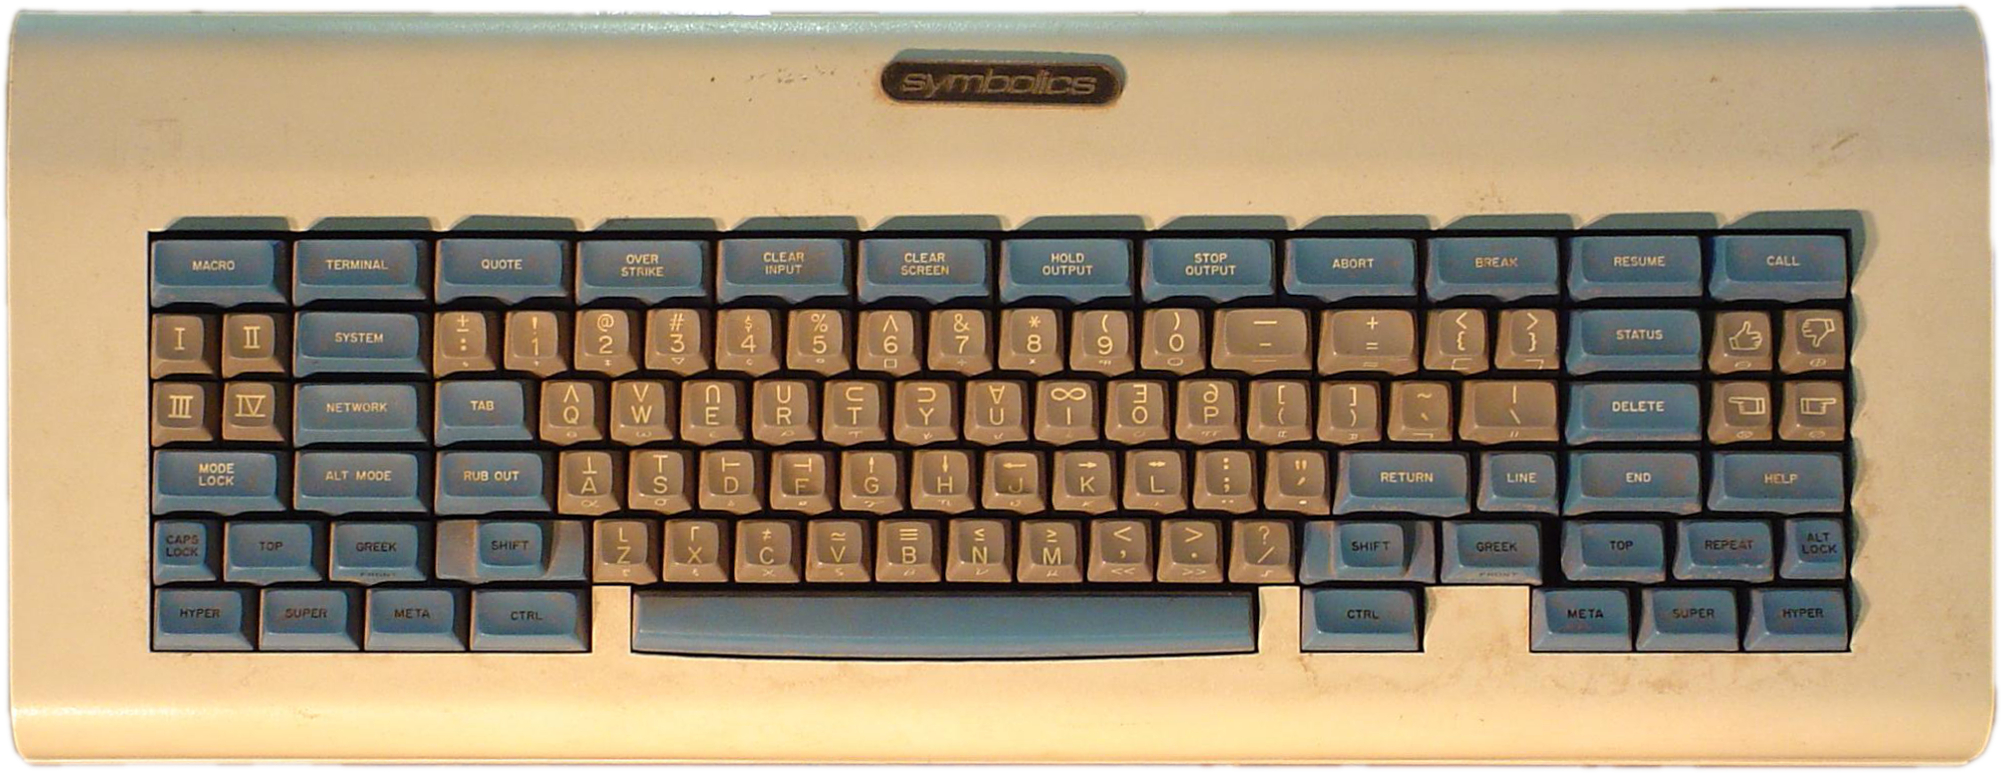 Space Cadet keyboard